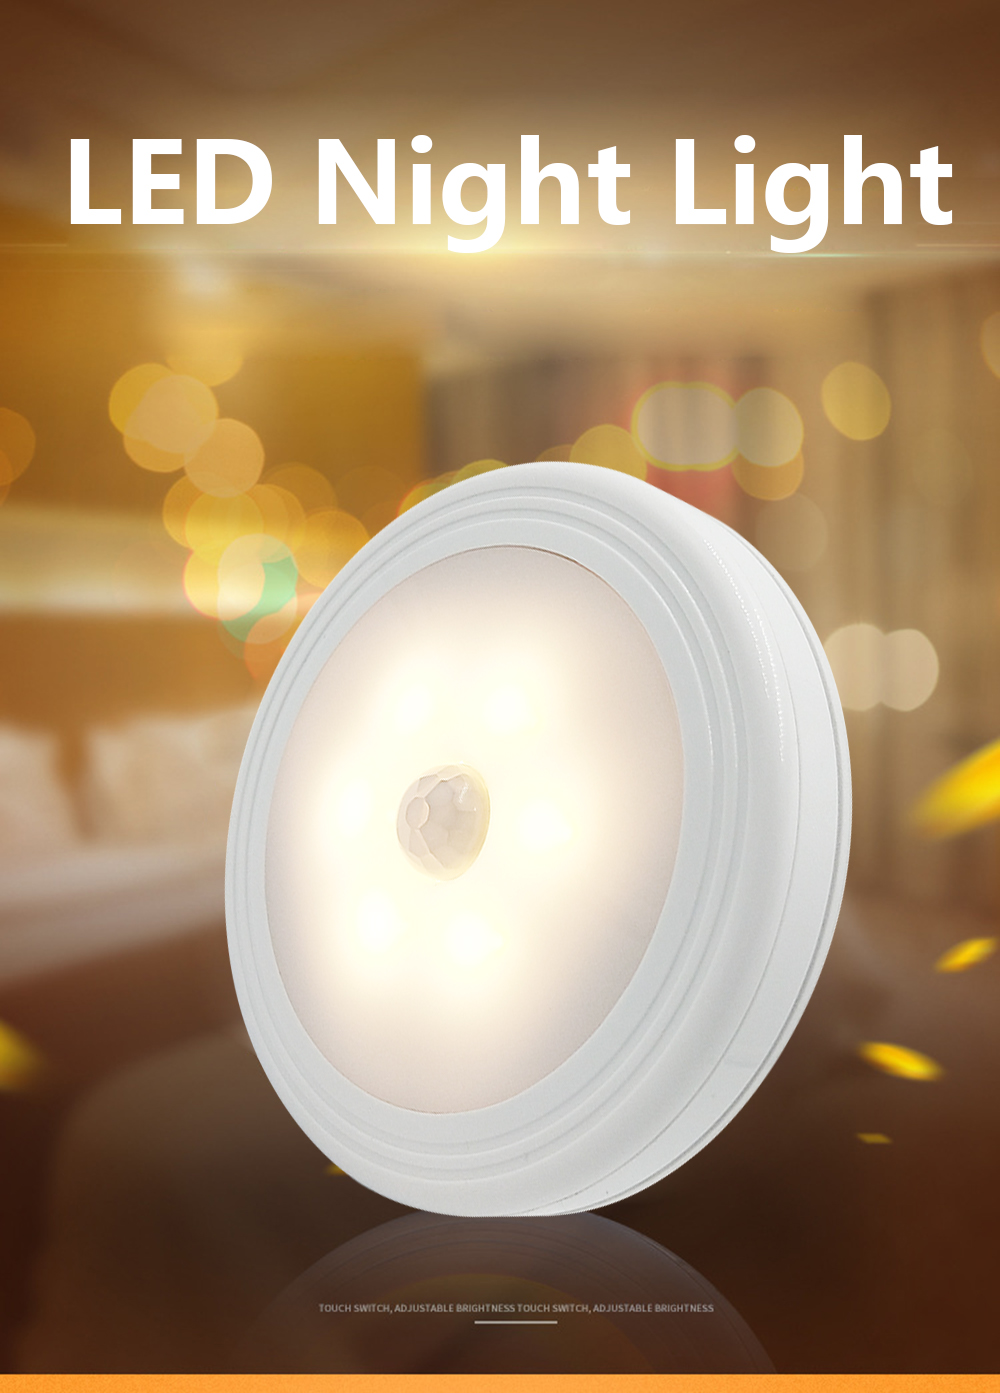 BRELONG LED Induction Night Light Corridor Wall Lamp